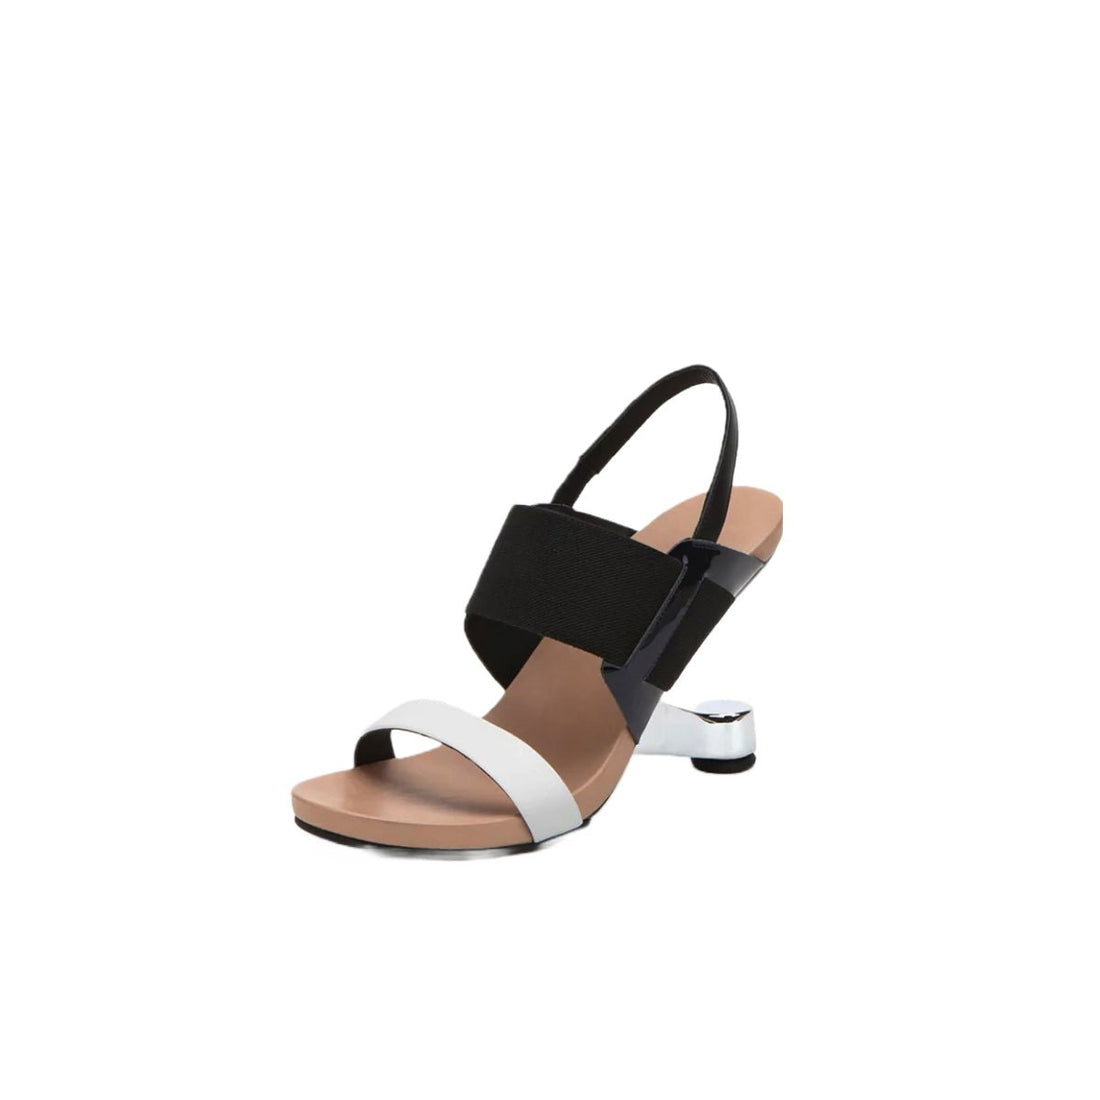 Raro Leather White Sandals - 0cm